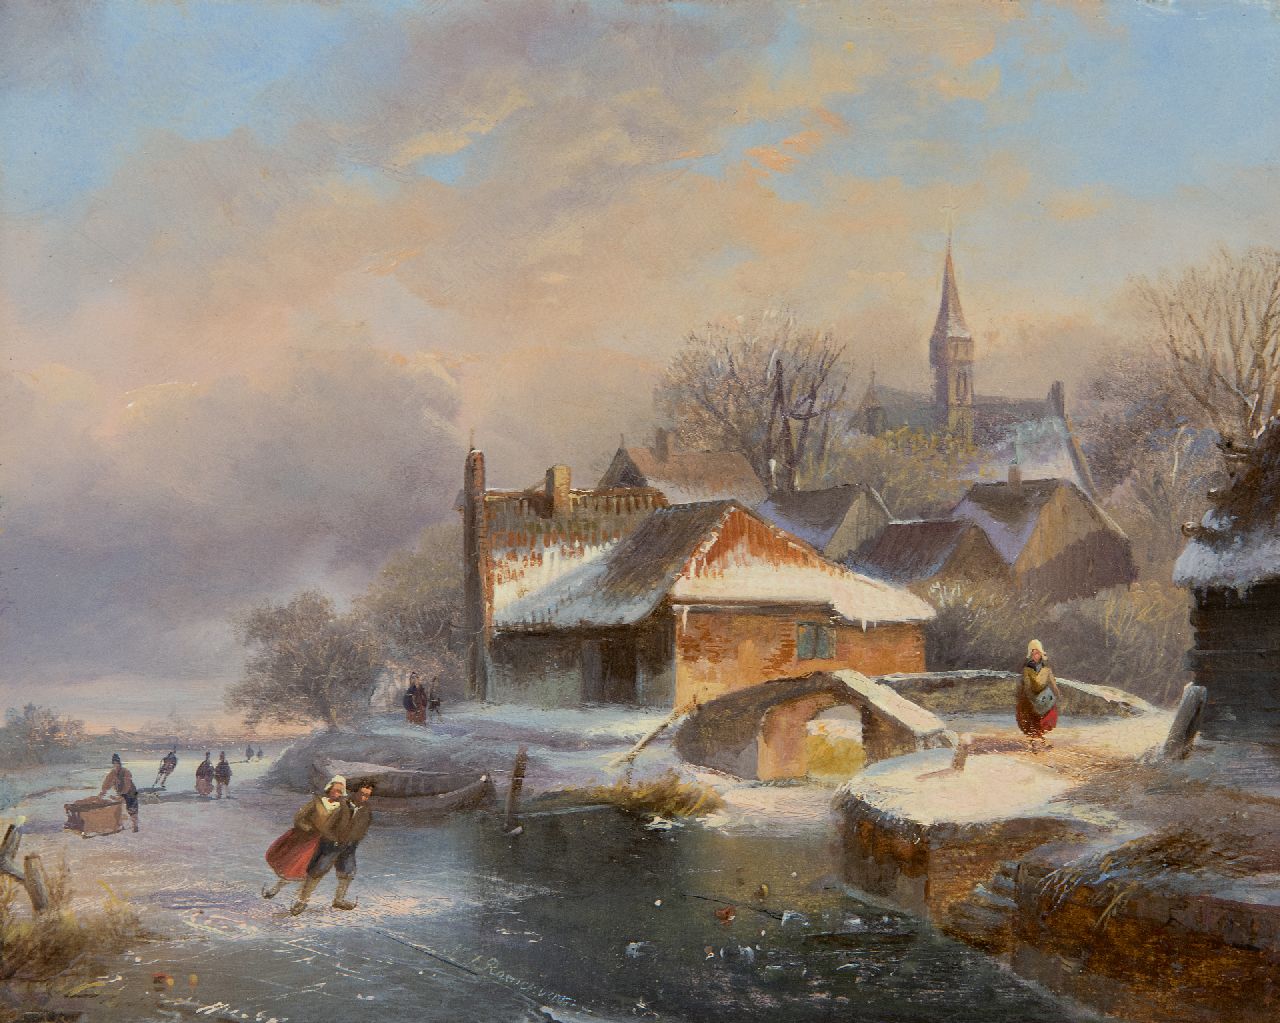 Roosenboom N.J.  | Nicolaas Johannes Roosenboom, Skaters at a snowy village, oil on panel 18.5 x 23.0 cm, signed l.c.